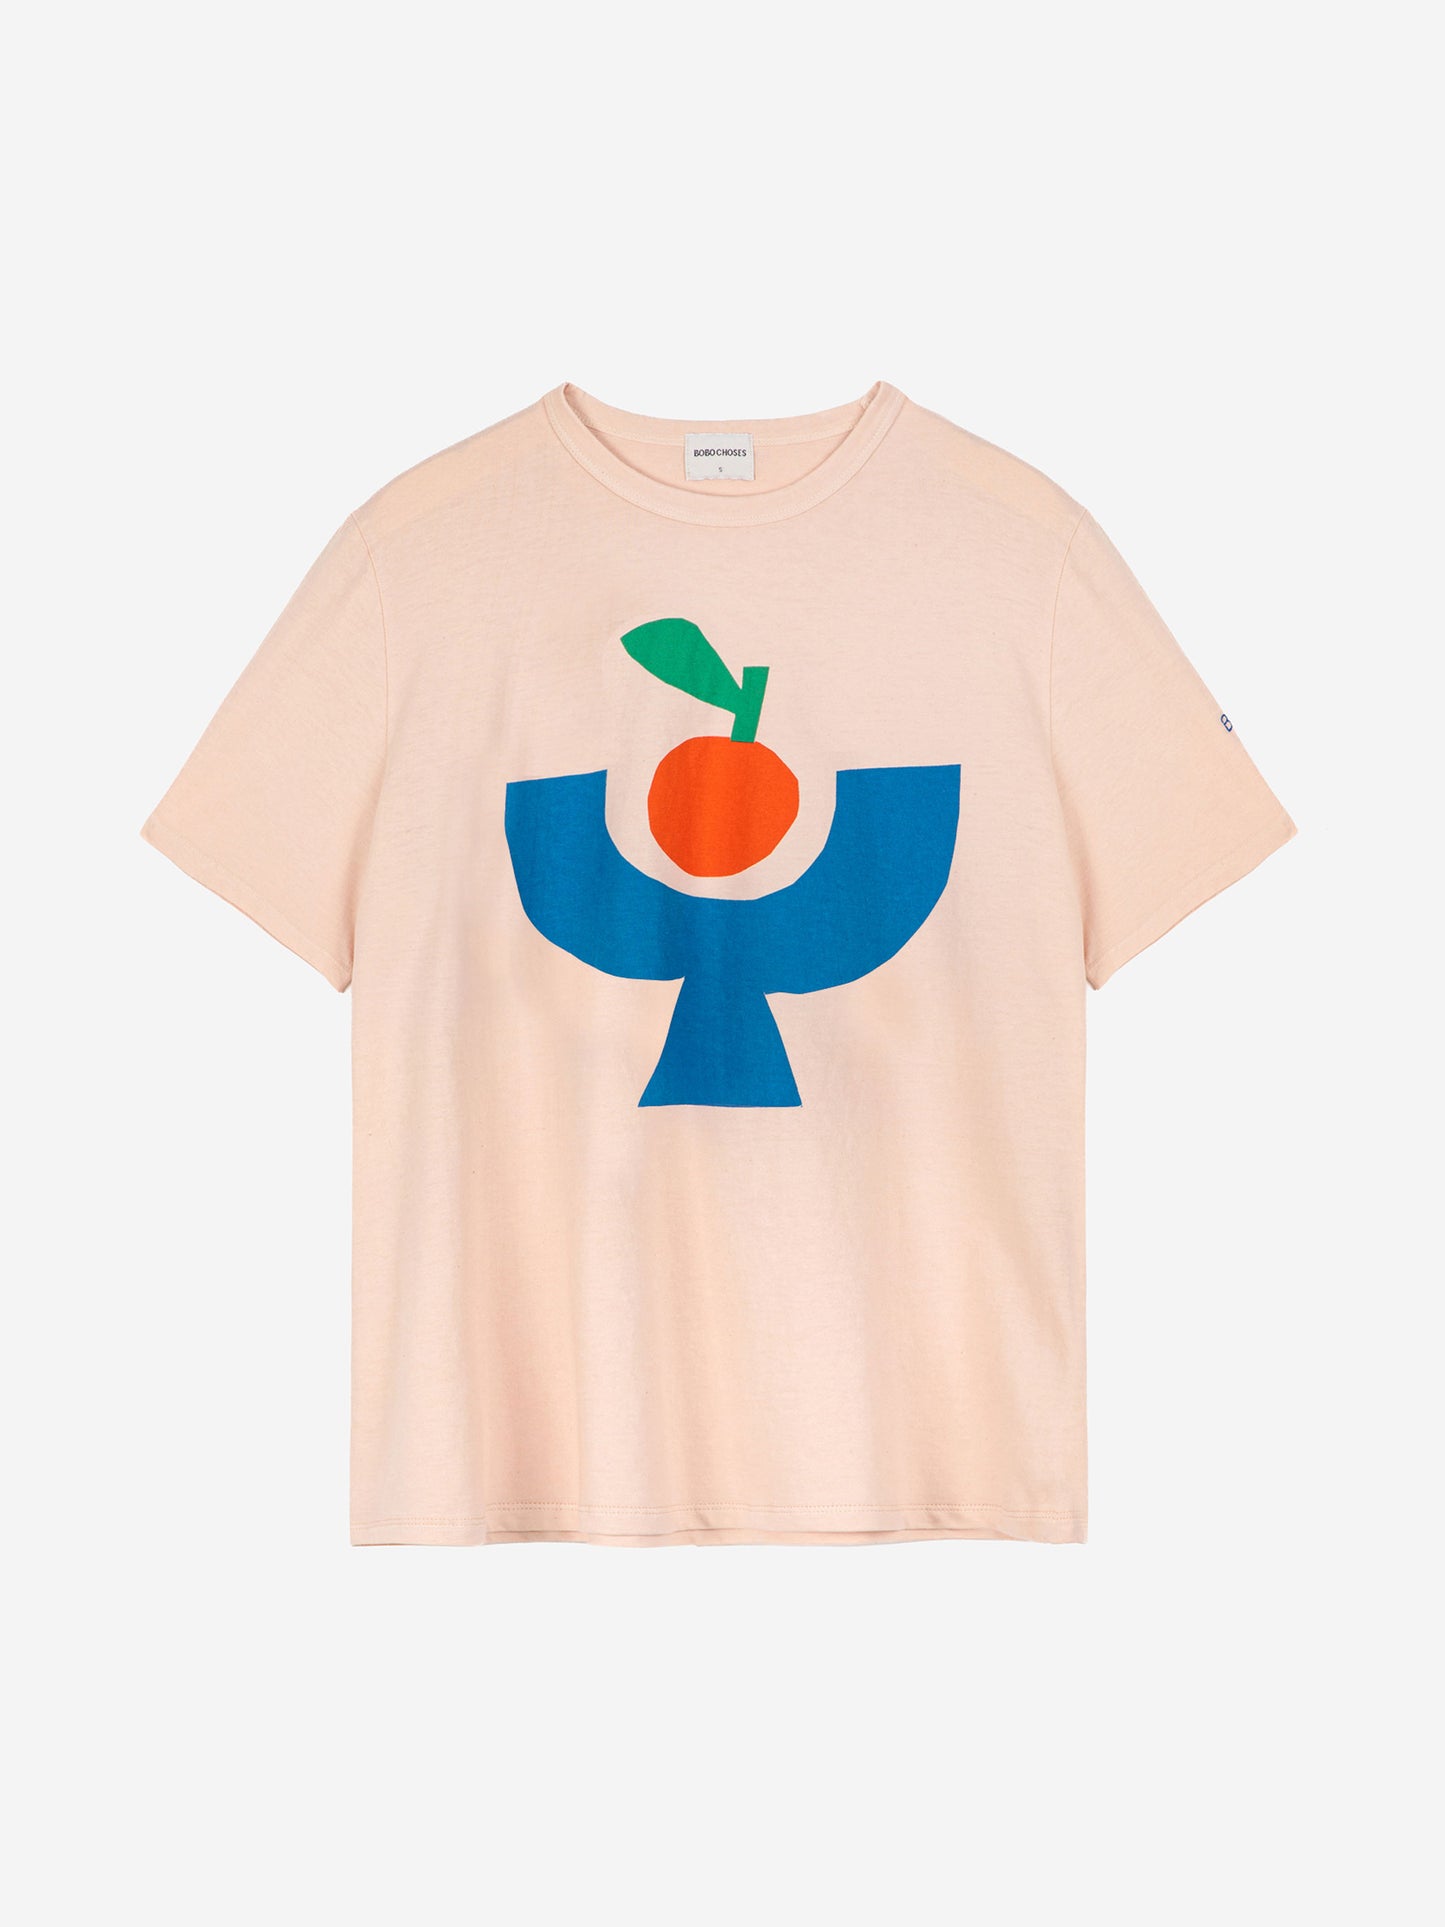 Tomato Plate t-shirt